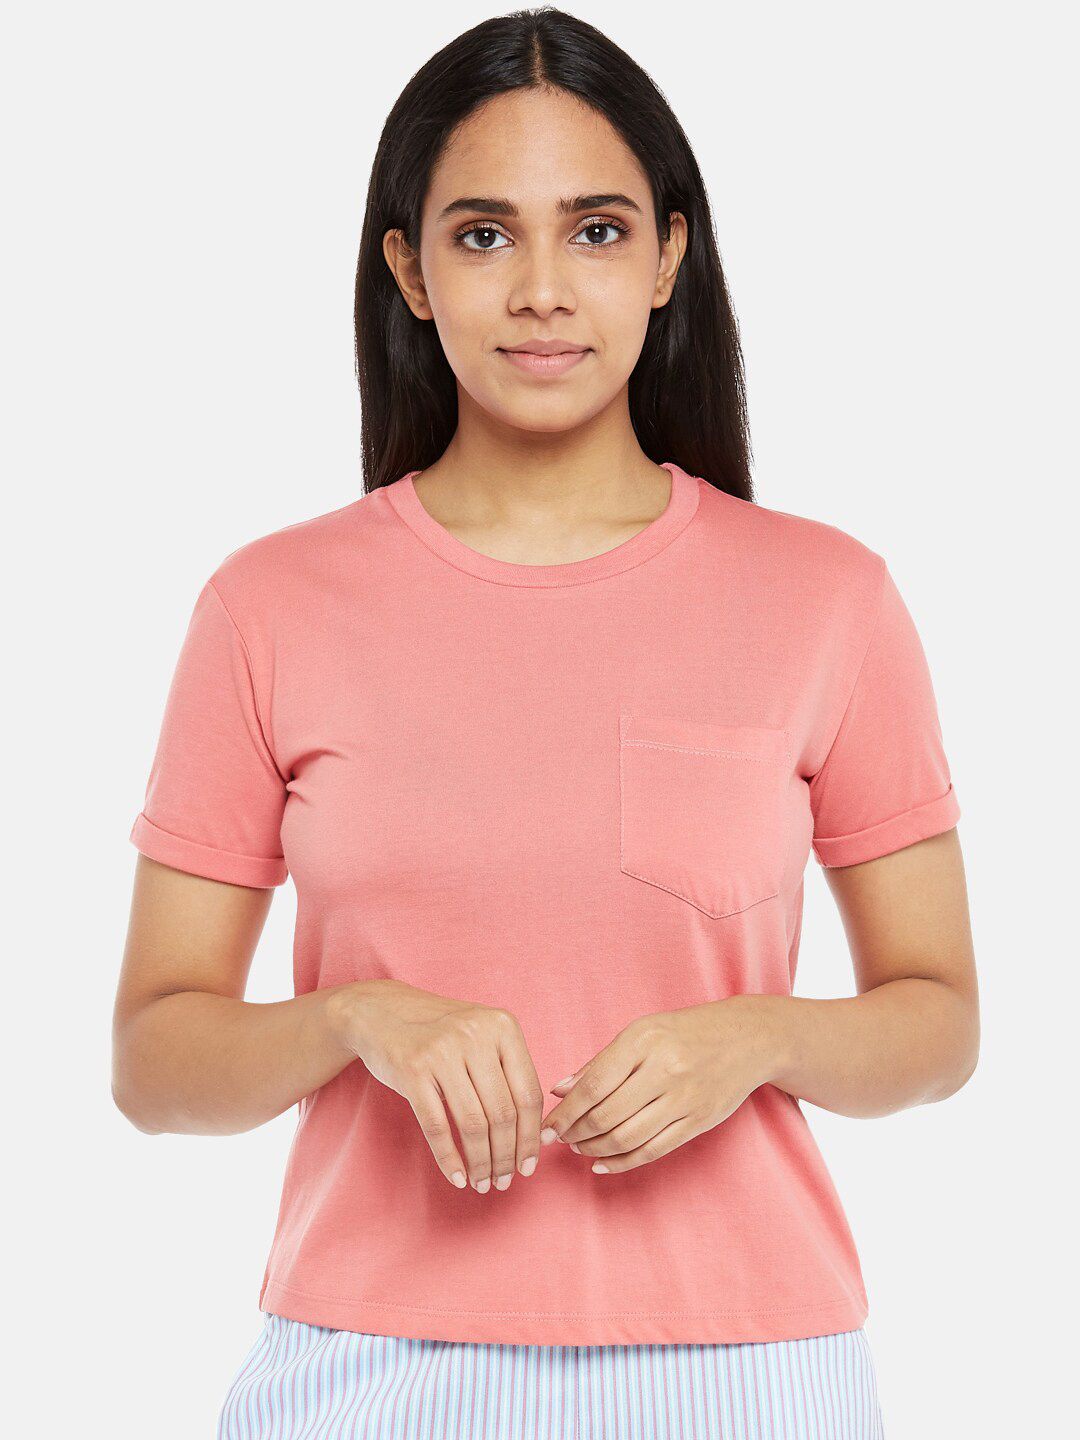 Dreamz by Pantaloons Women Pink Printed Lounge T-shirt Price in India